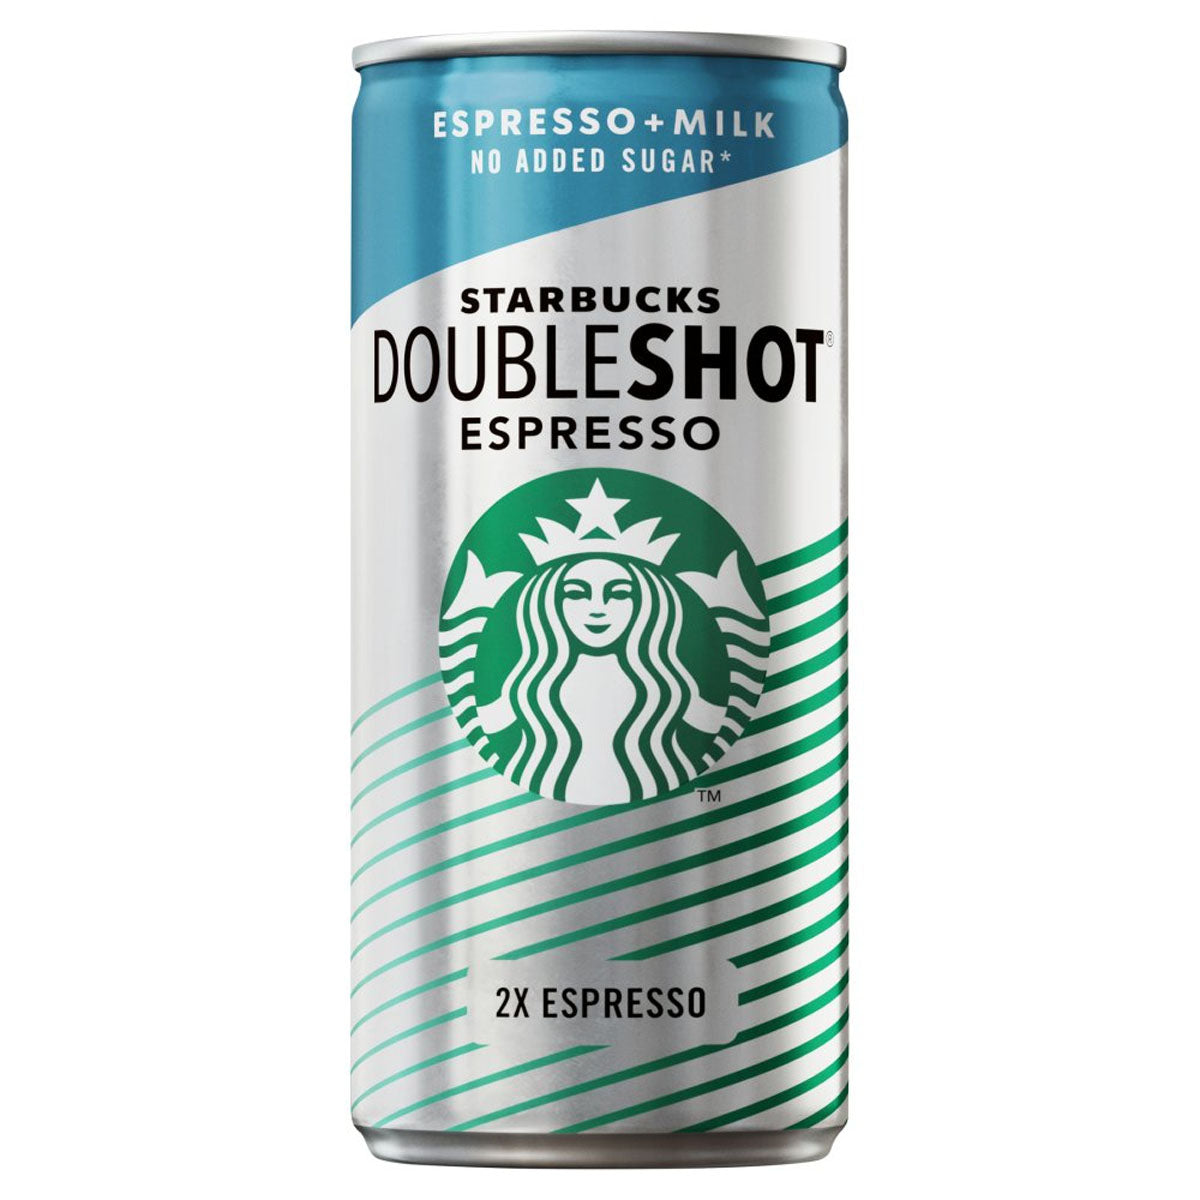 Starbucks - Doubleshot Espresso No Added Sugar Iced Coffee - 200ml.